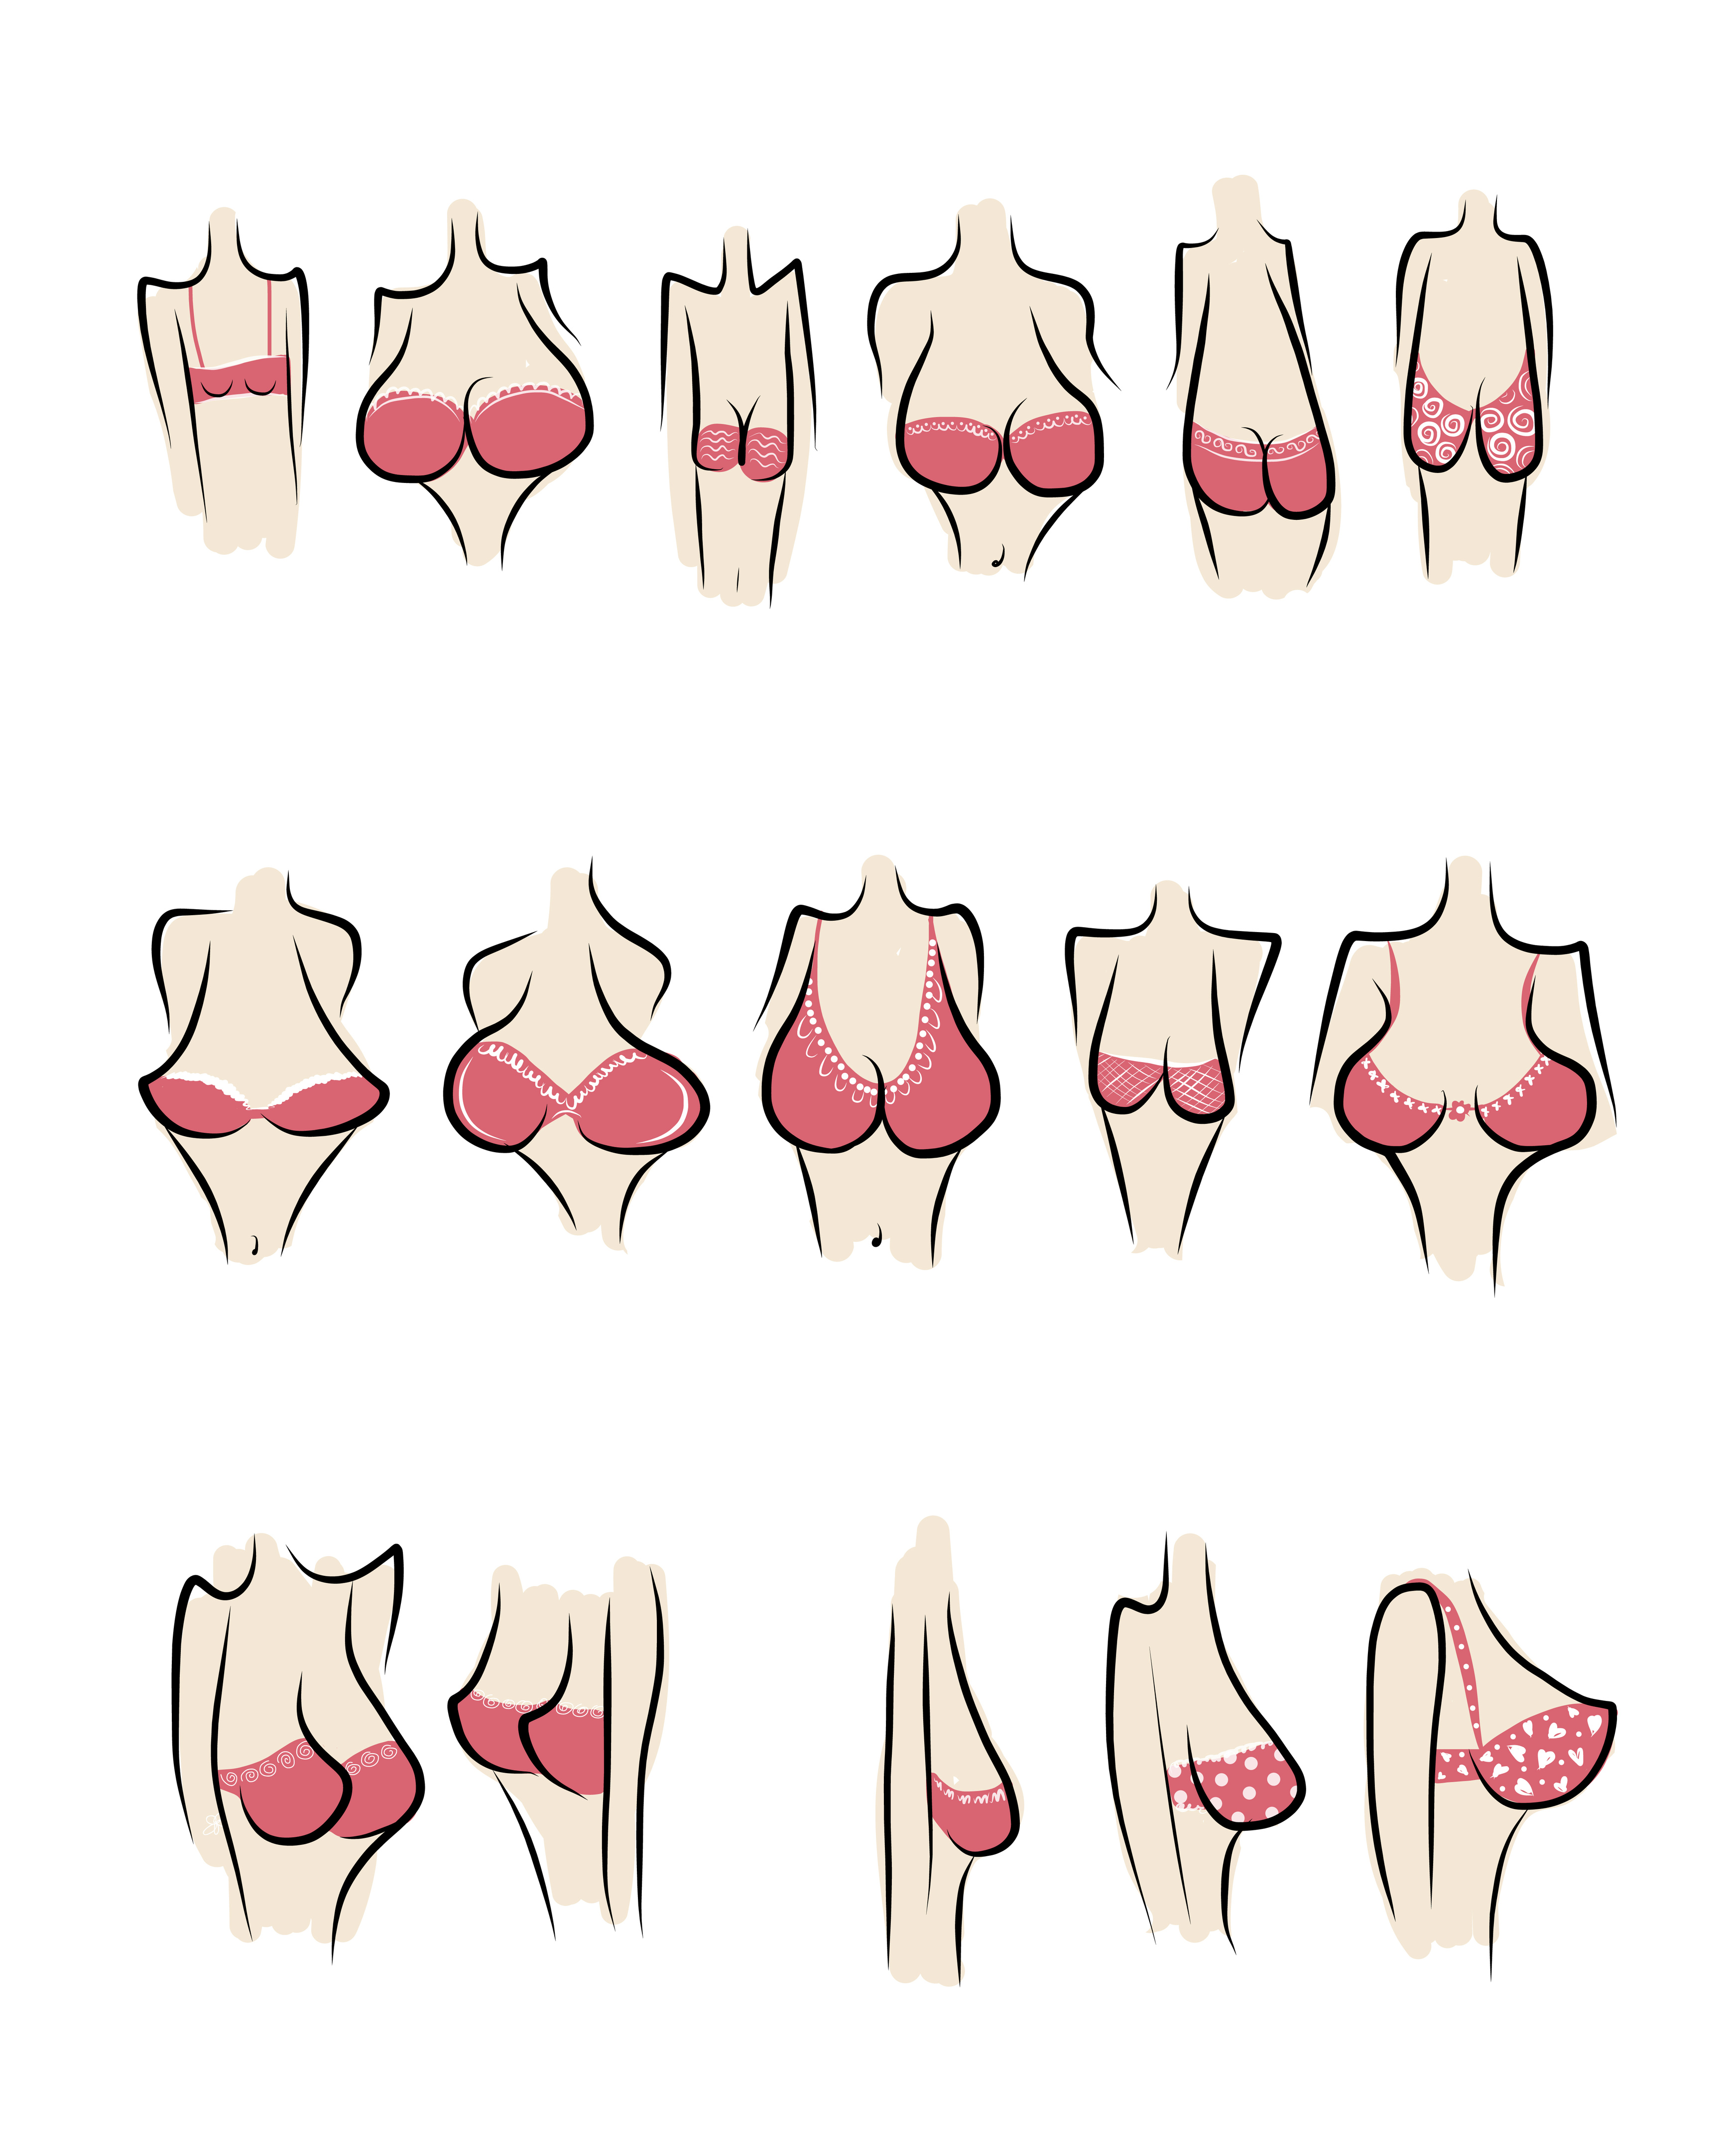 форма груди женщин и ее характер фото 65